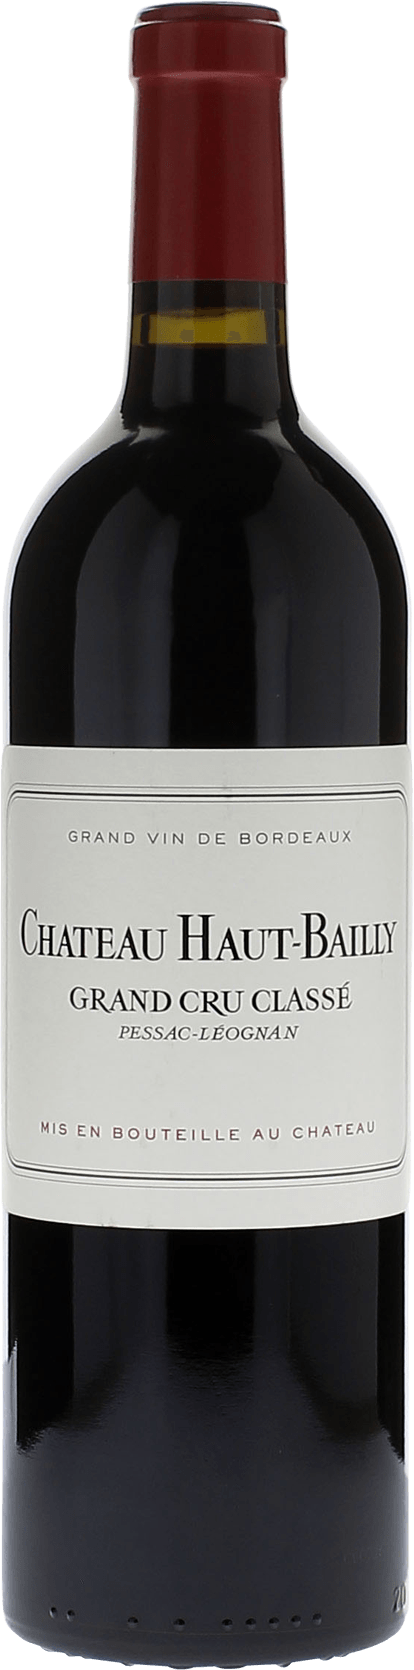 Haut bailly 1996 cru class Pessac-Lognan, Bordeaux rouge